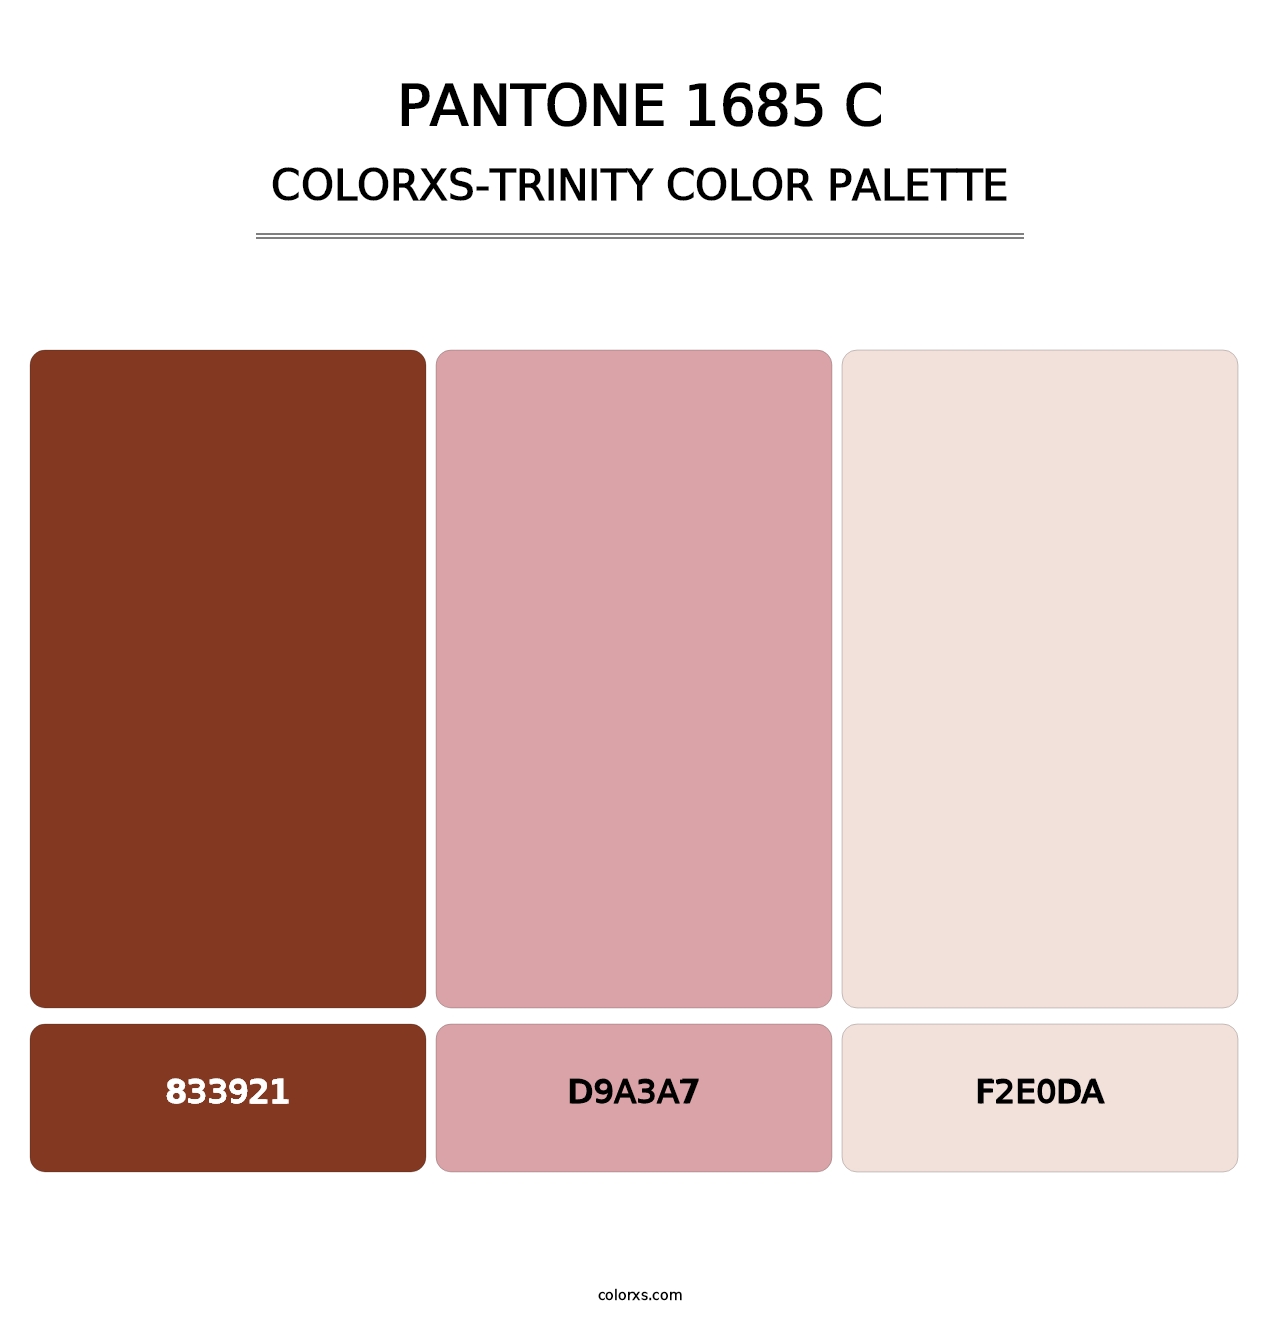 PANTONE 1685 C - Colorxs Trinity Palette